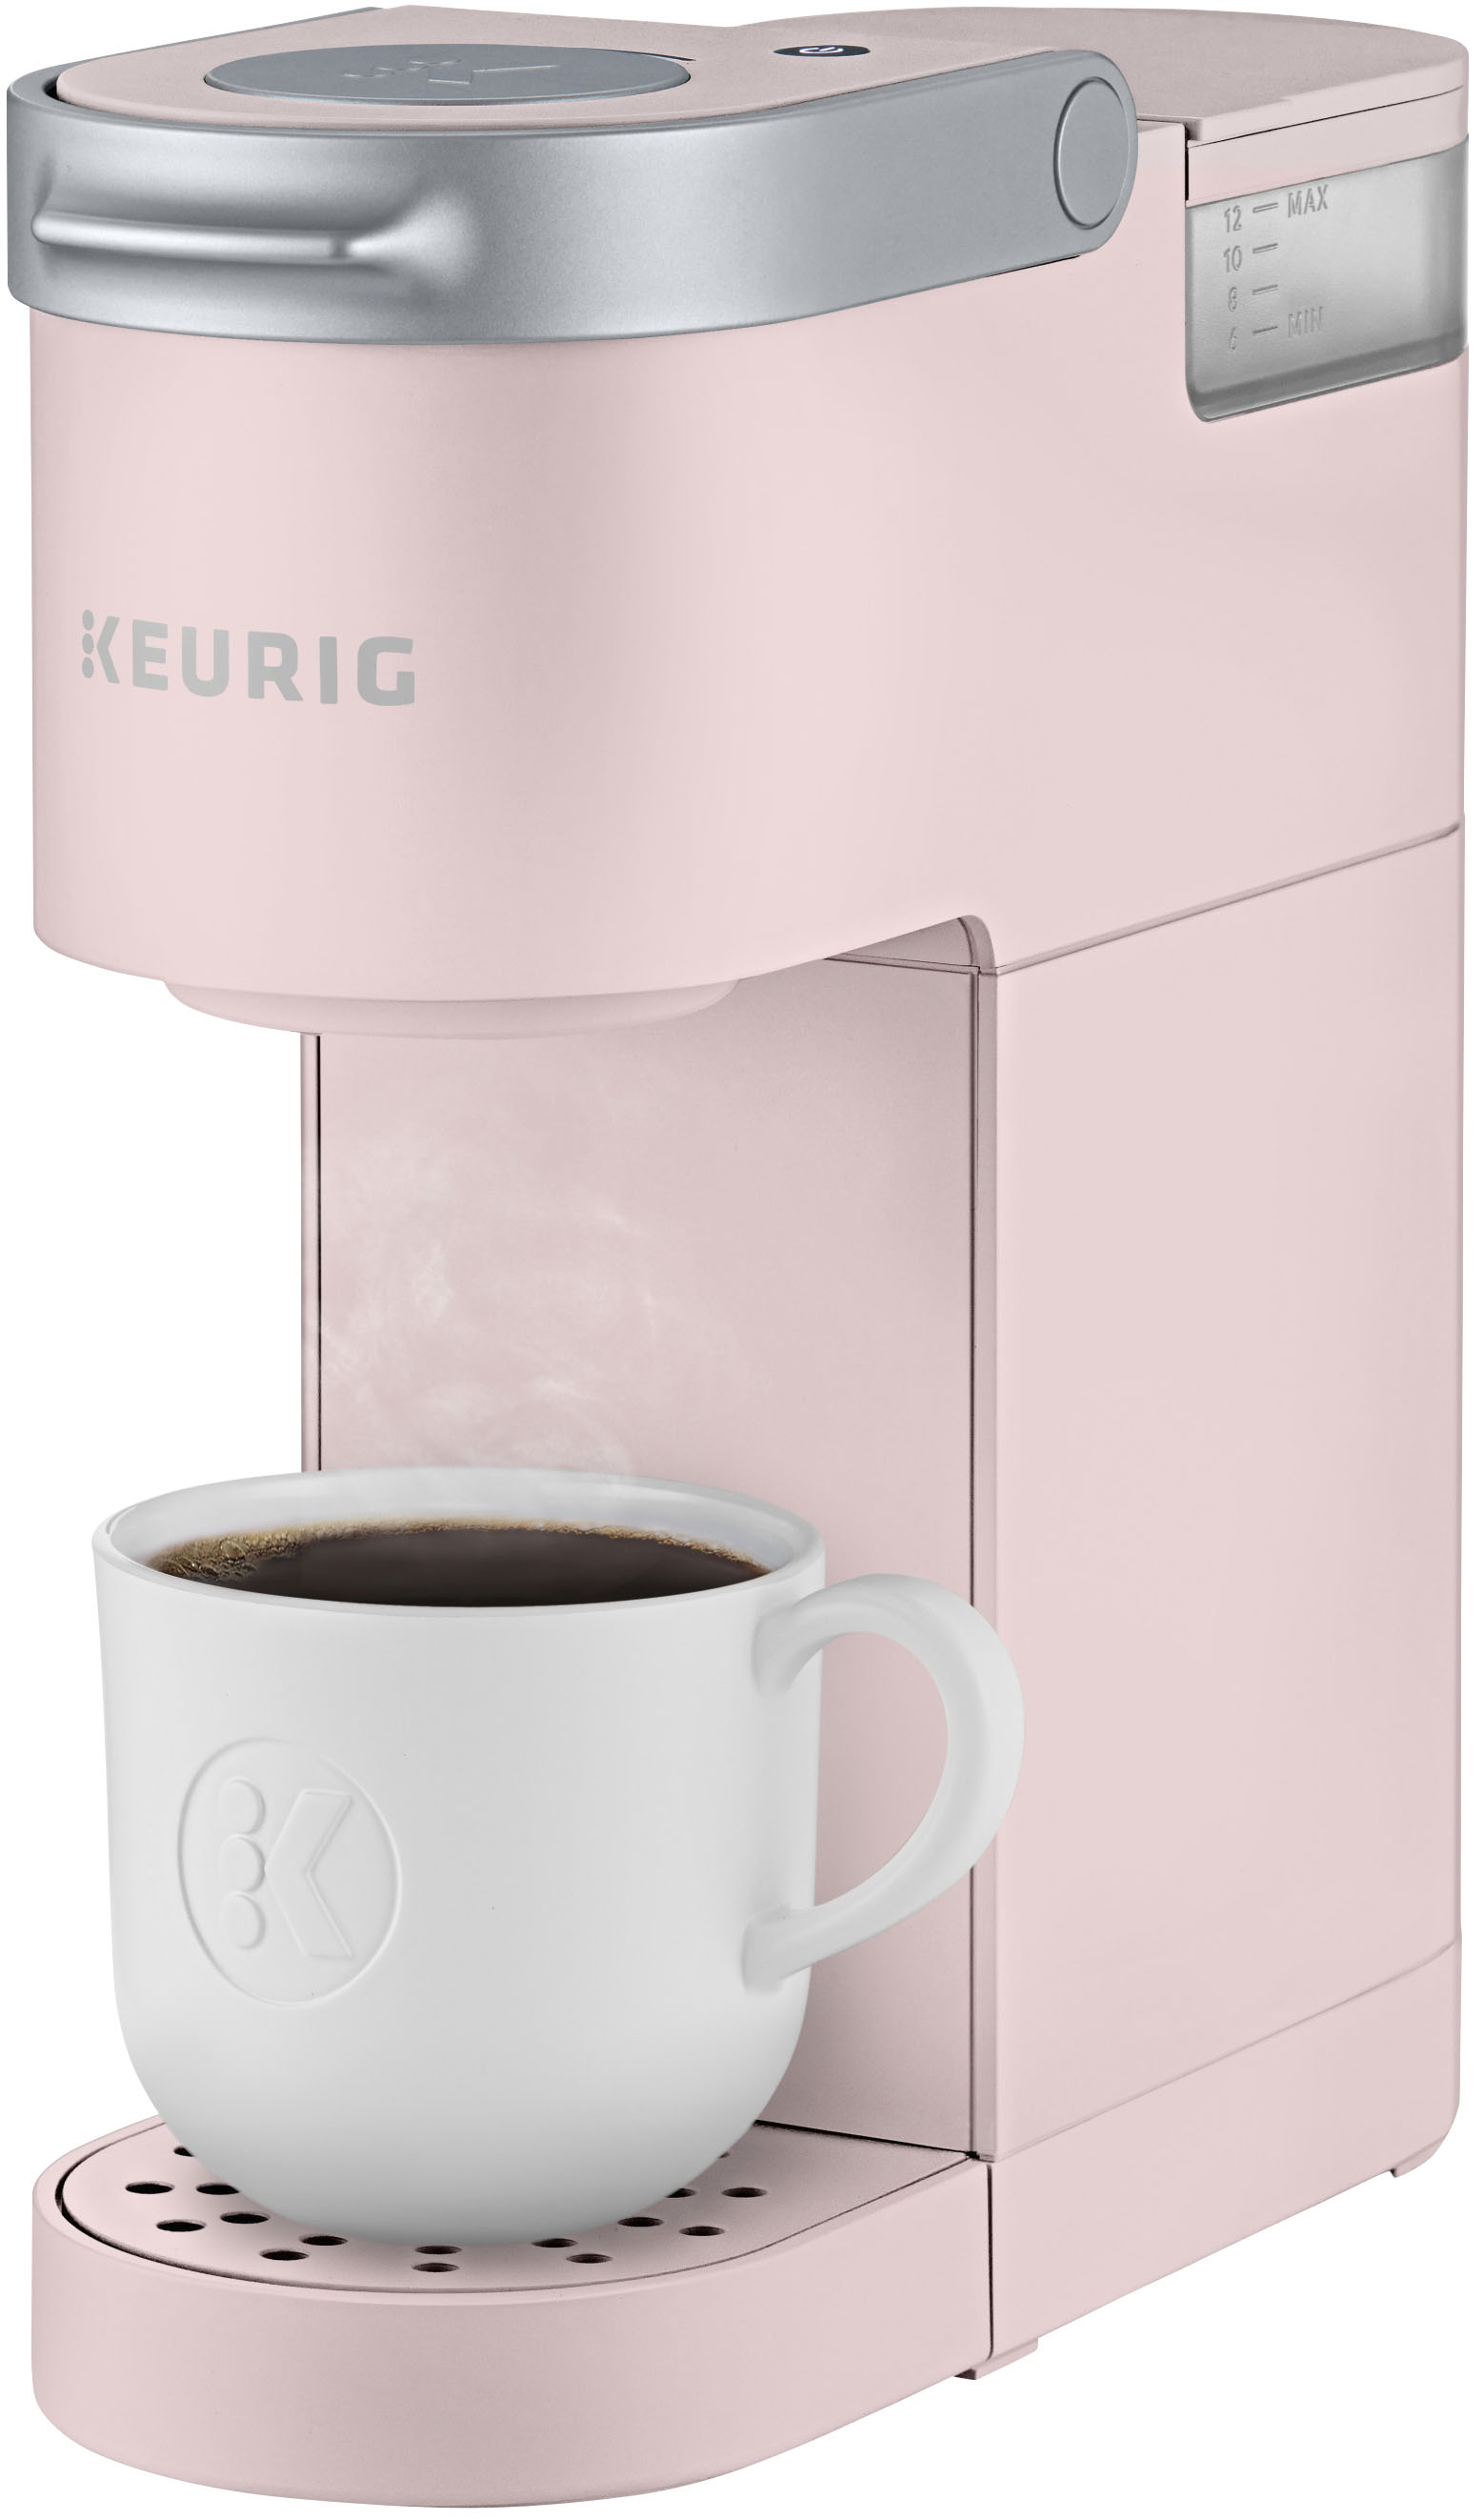 Pink Pearl Fantasy Keurig K-compact, Pink Pearl Fantasy Keurig, Pink  Appliances, Iridescent Appliances, Iridescent Keurig, Ready to Ship 